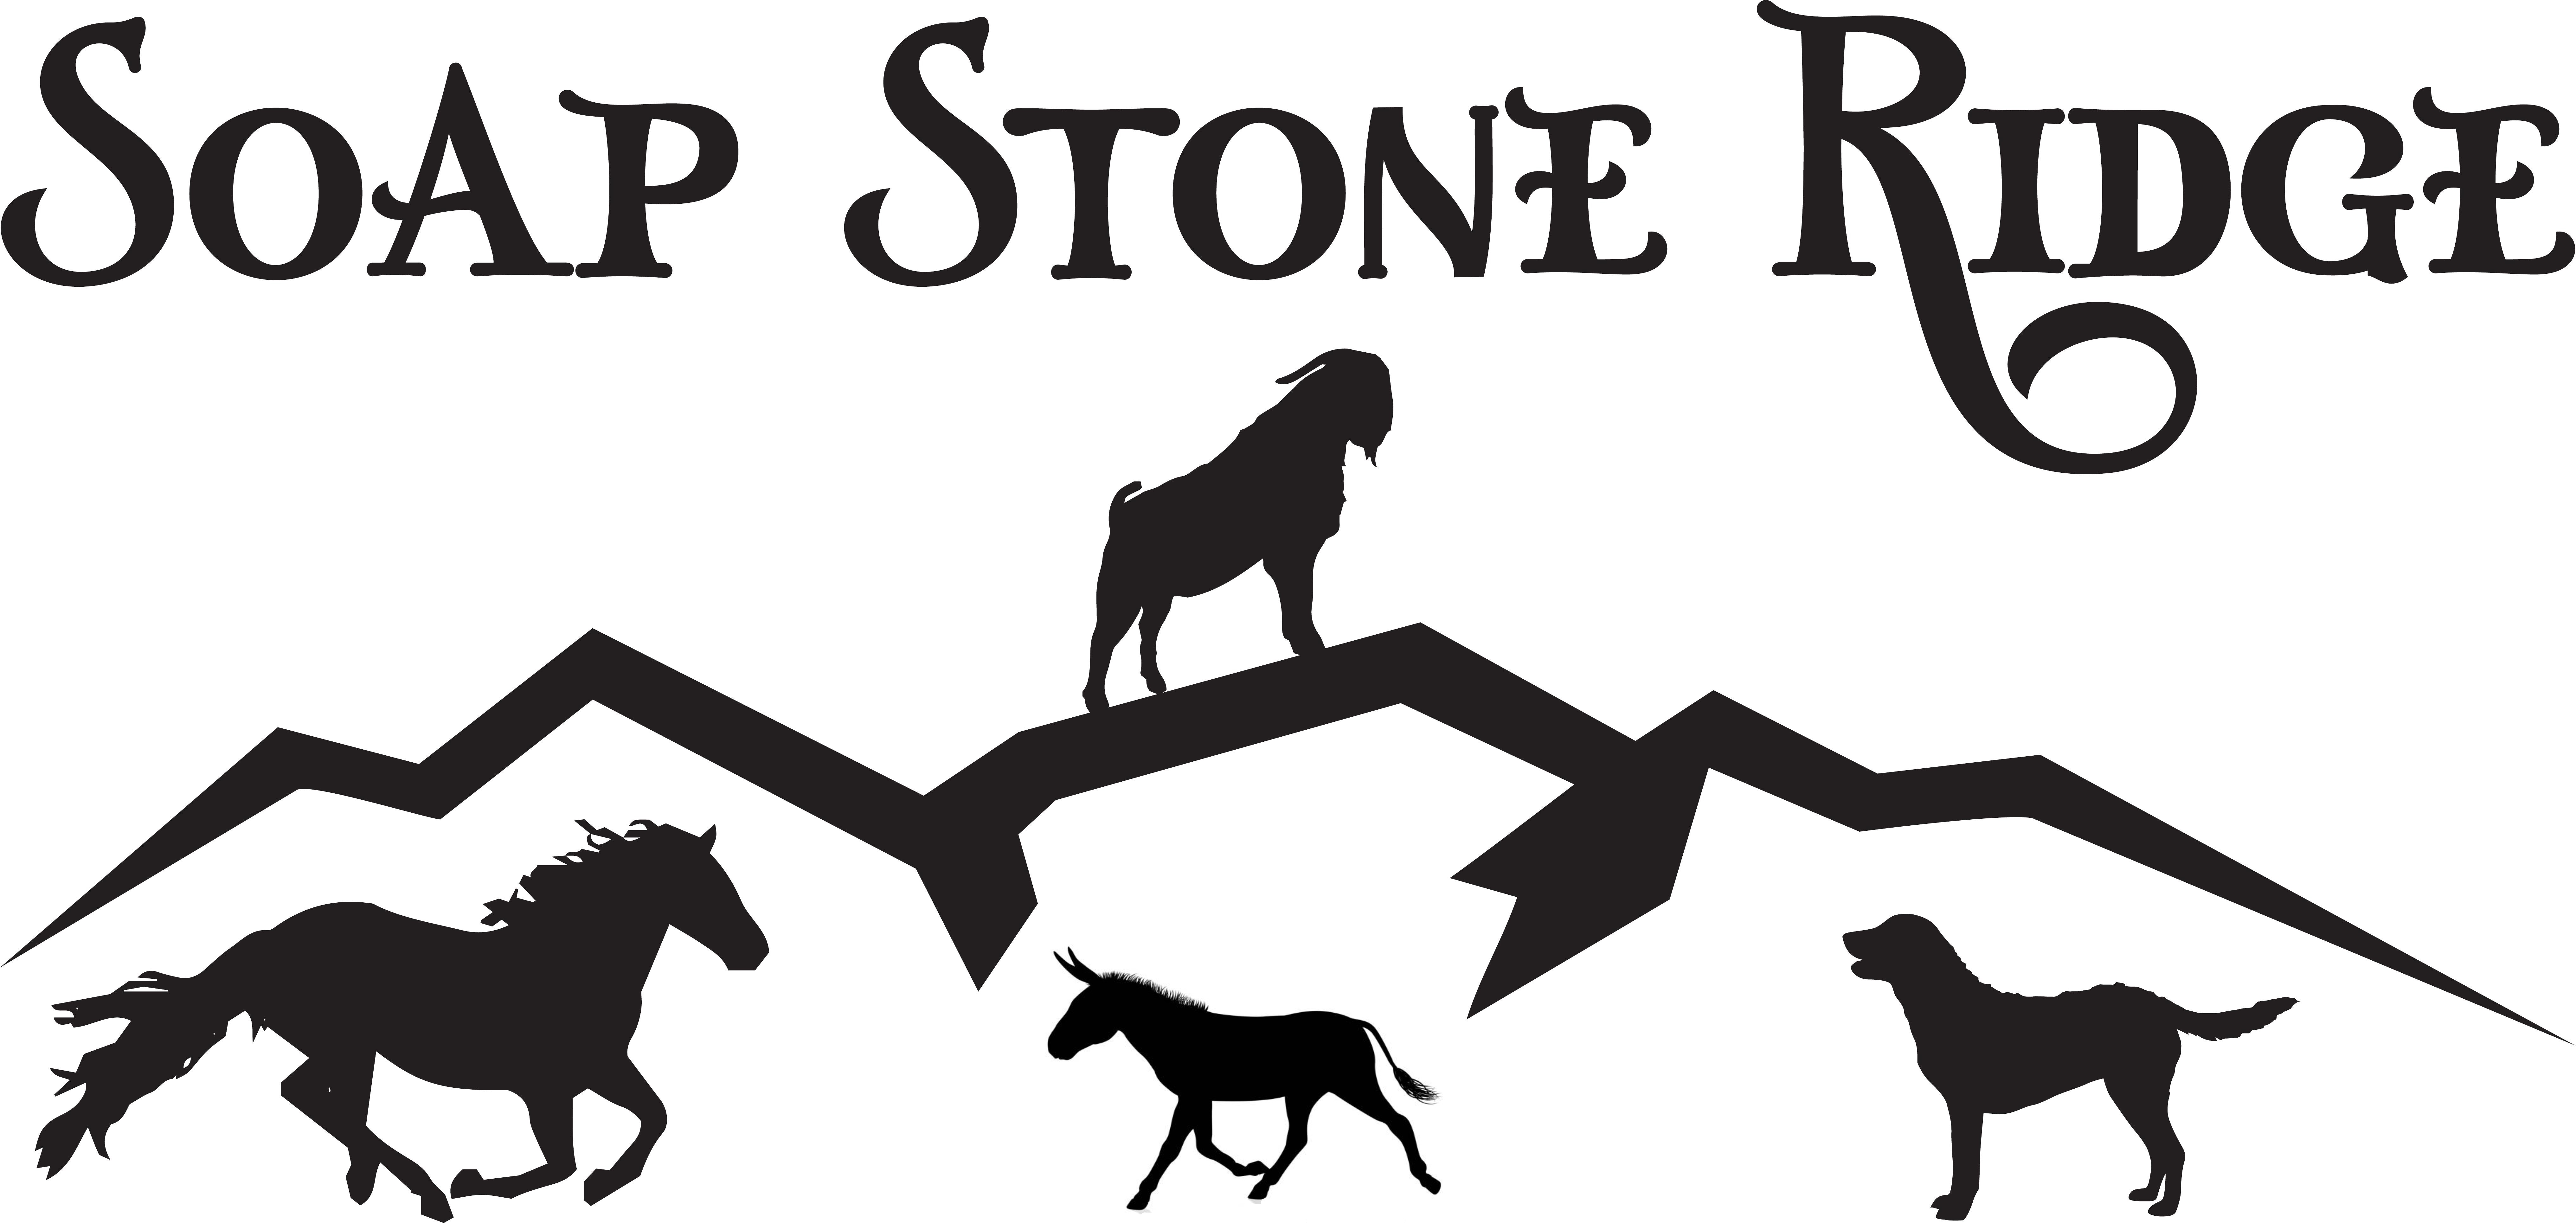 Soap Stone Ridge LLC